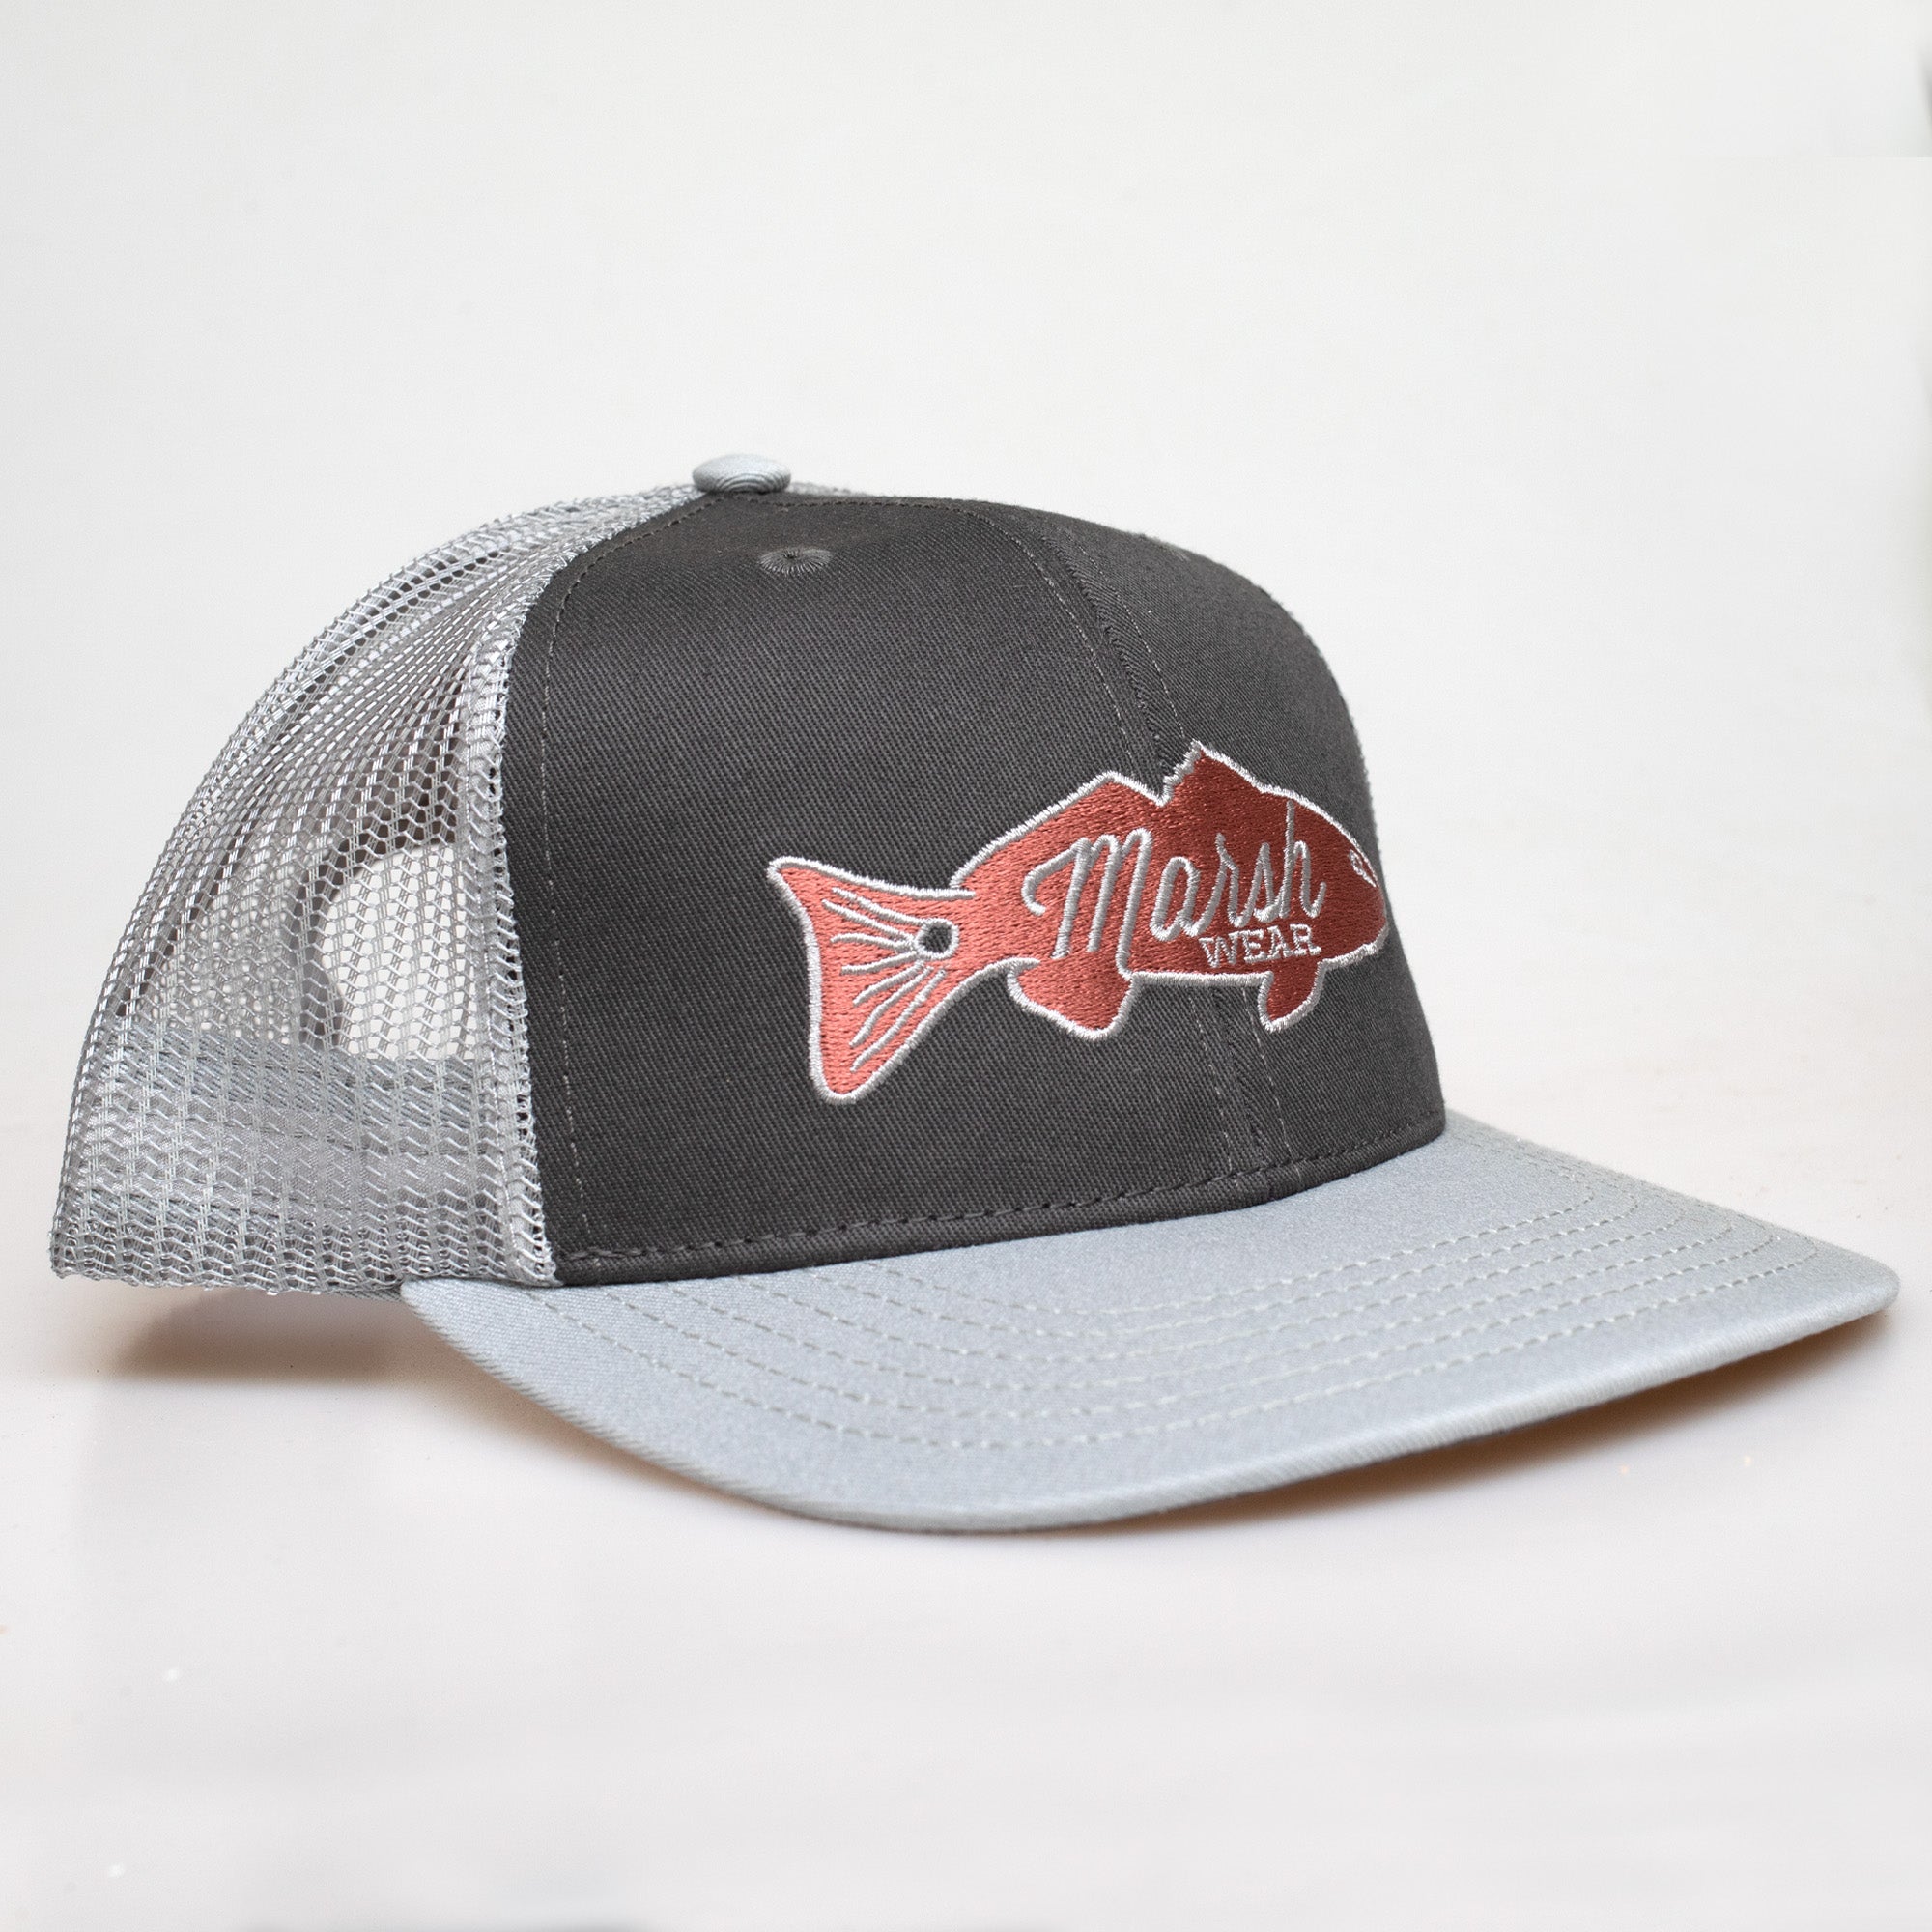 Marsh Wear Retro Redfish Trucker Hat